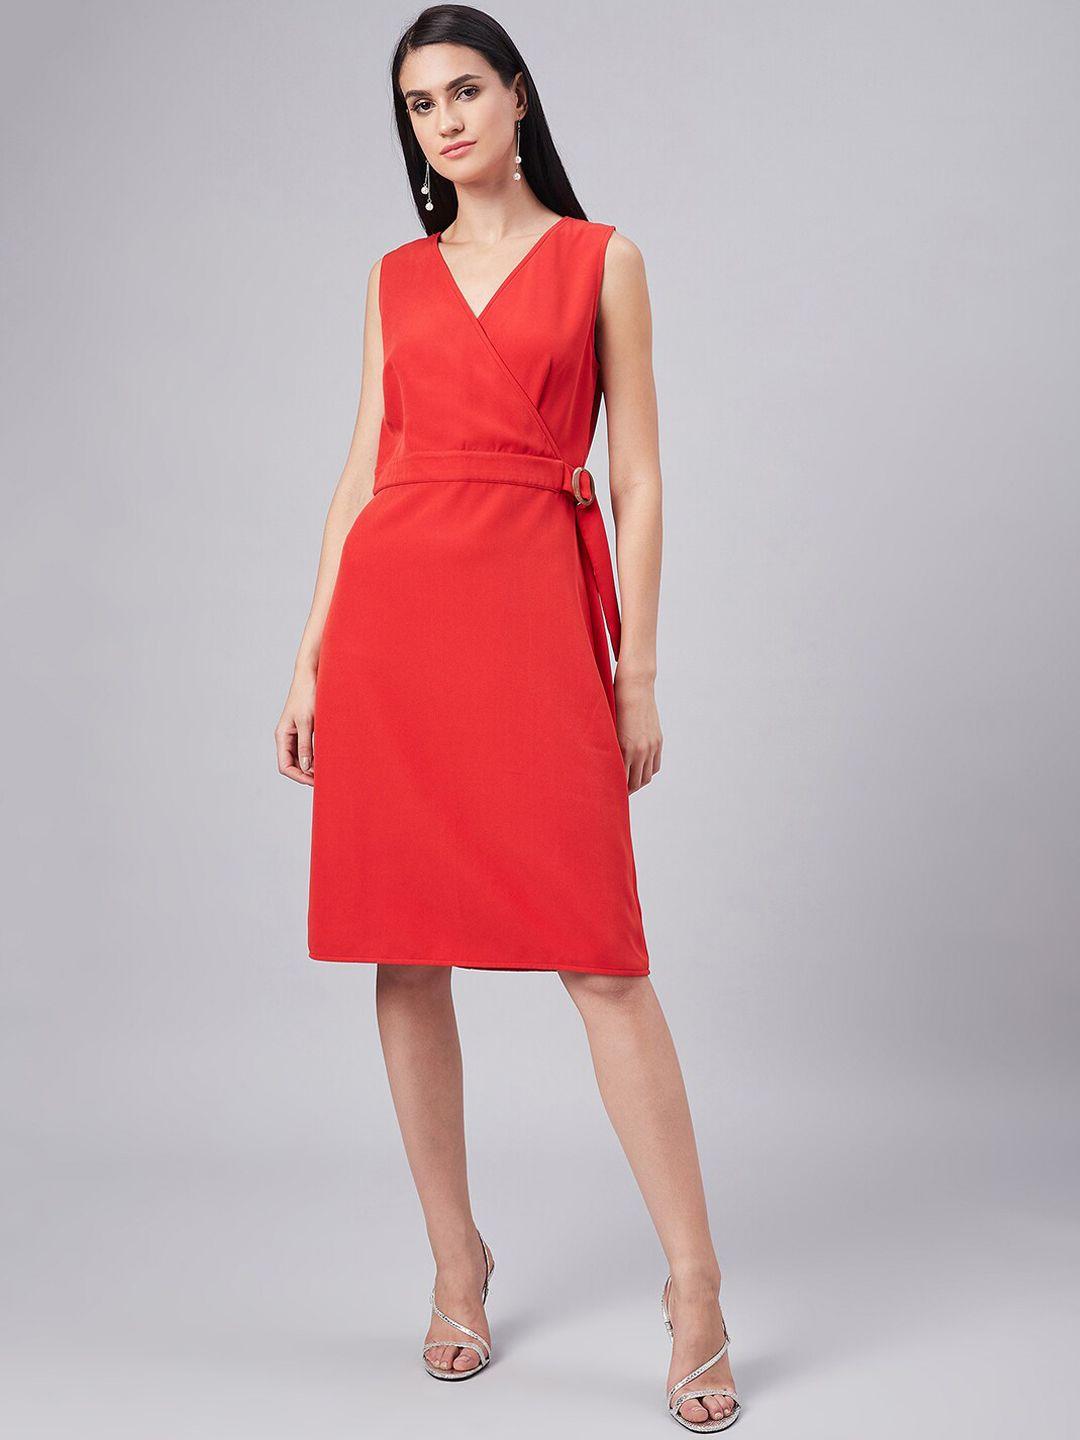 carlton-london-women-red-solid-a-line-dress